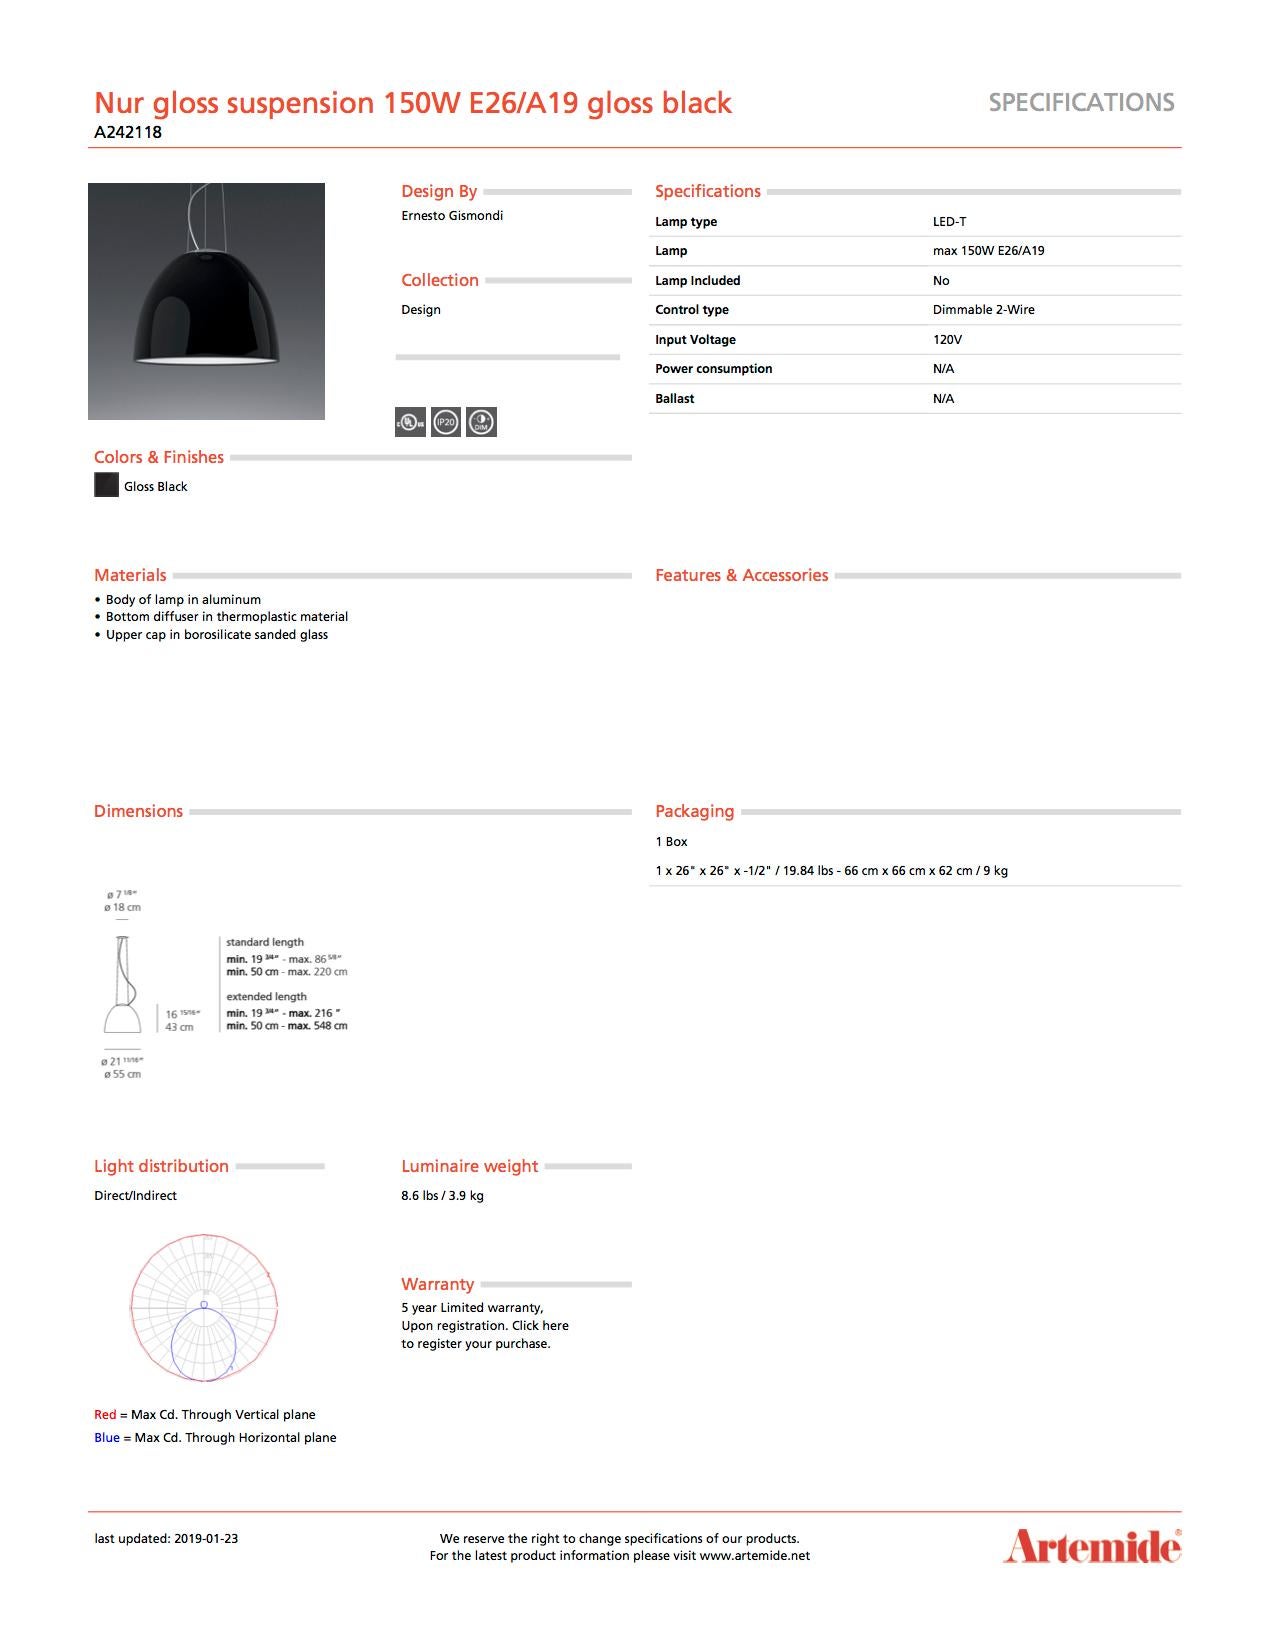 Modern Artemide Nur 150W E26/A19 Suspension Light in Glossy Black For Sale